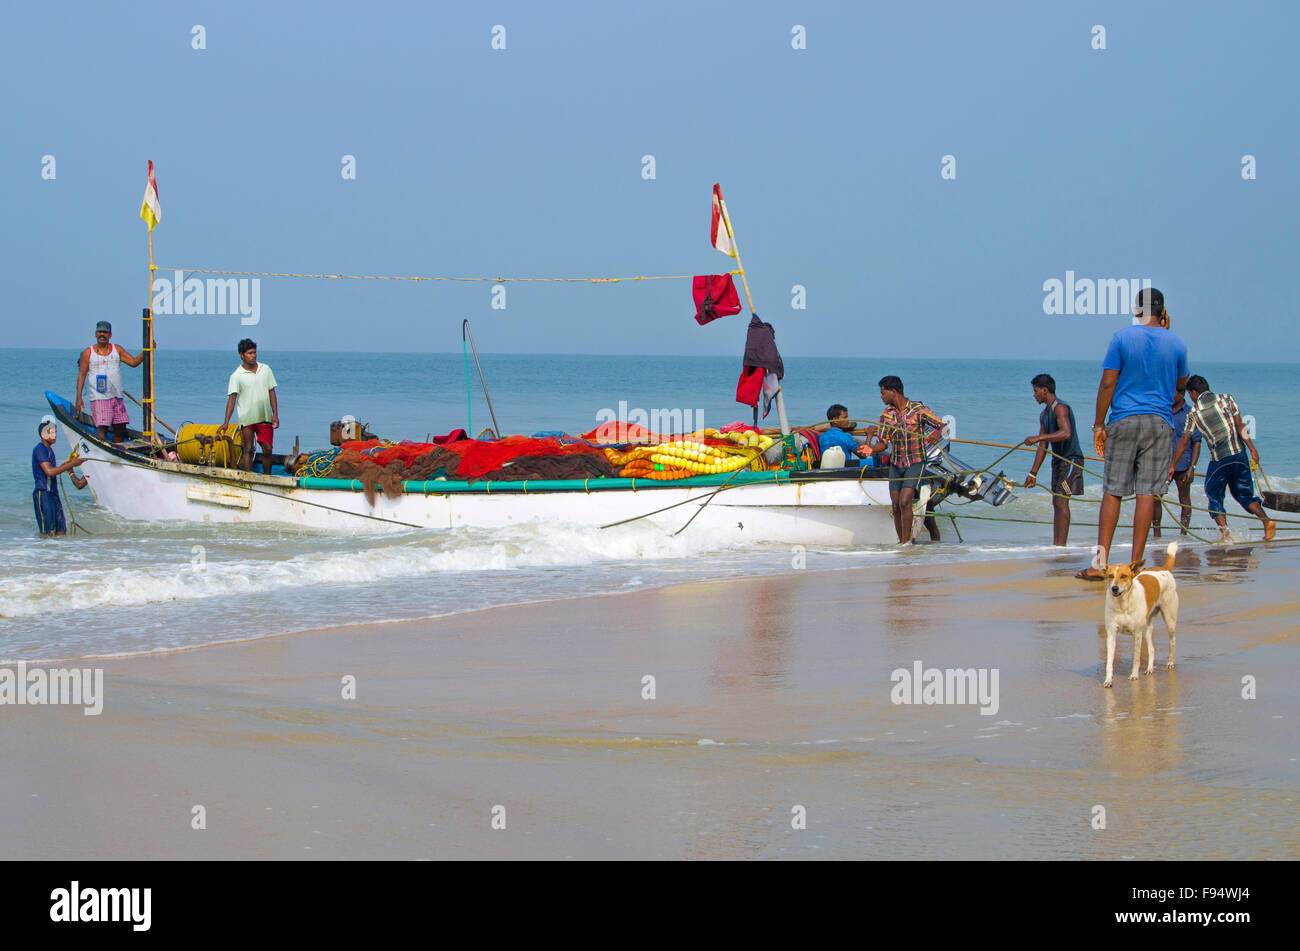 fishermen on the seashore equip the boat, fishermen, the sea, Hindus, India, the boat, preparation, fishing, the ocean Stock Photo